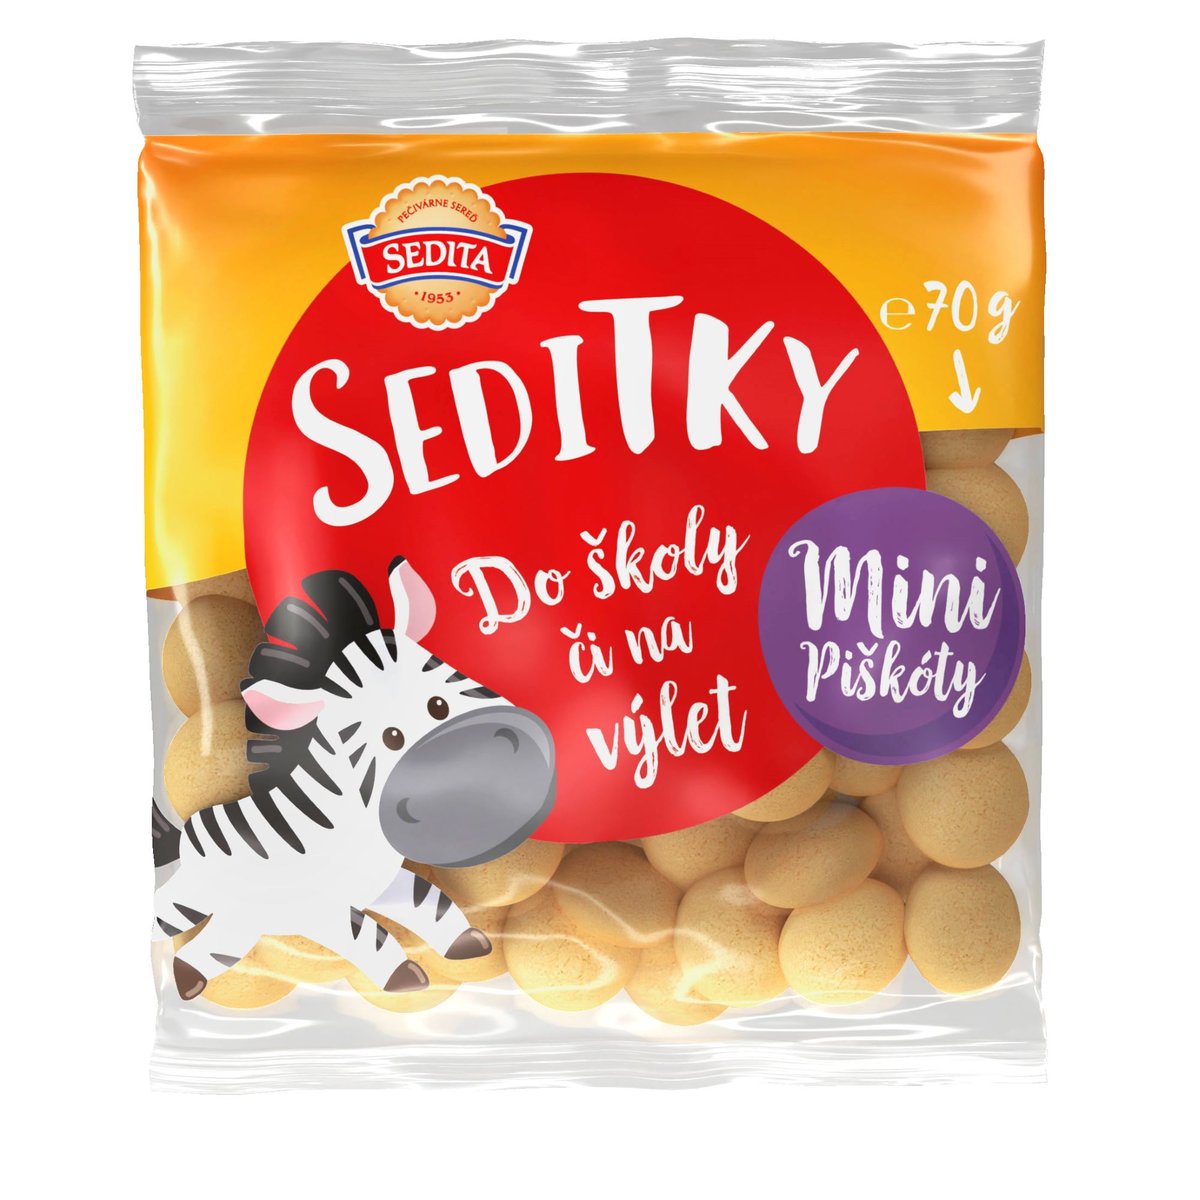 Sedita Seditky Mini piškoty